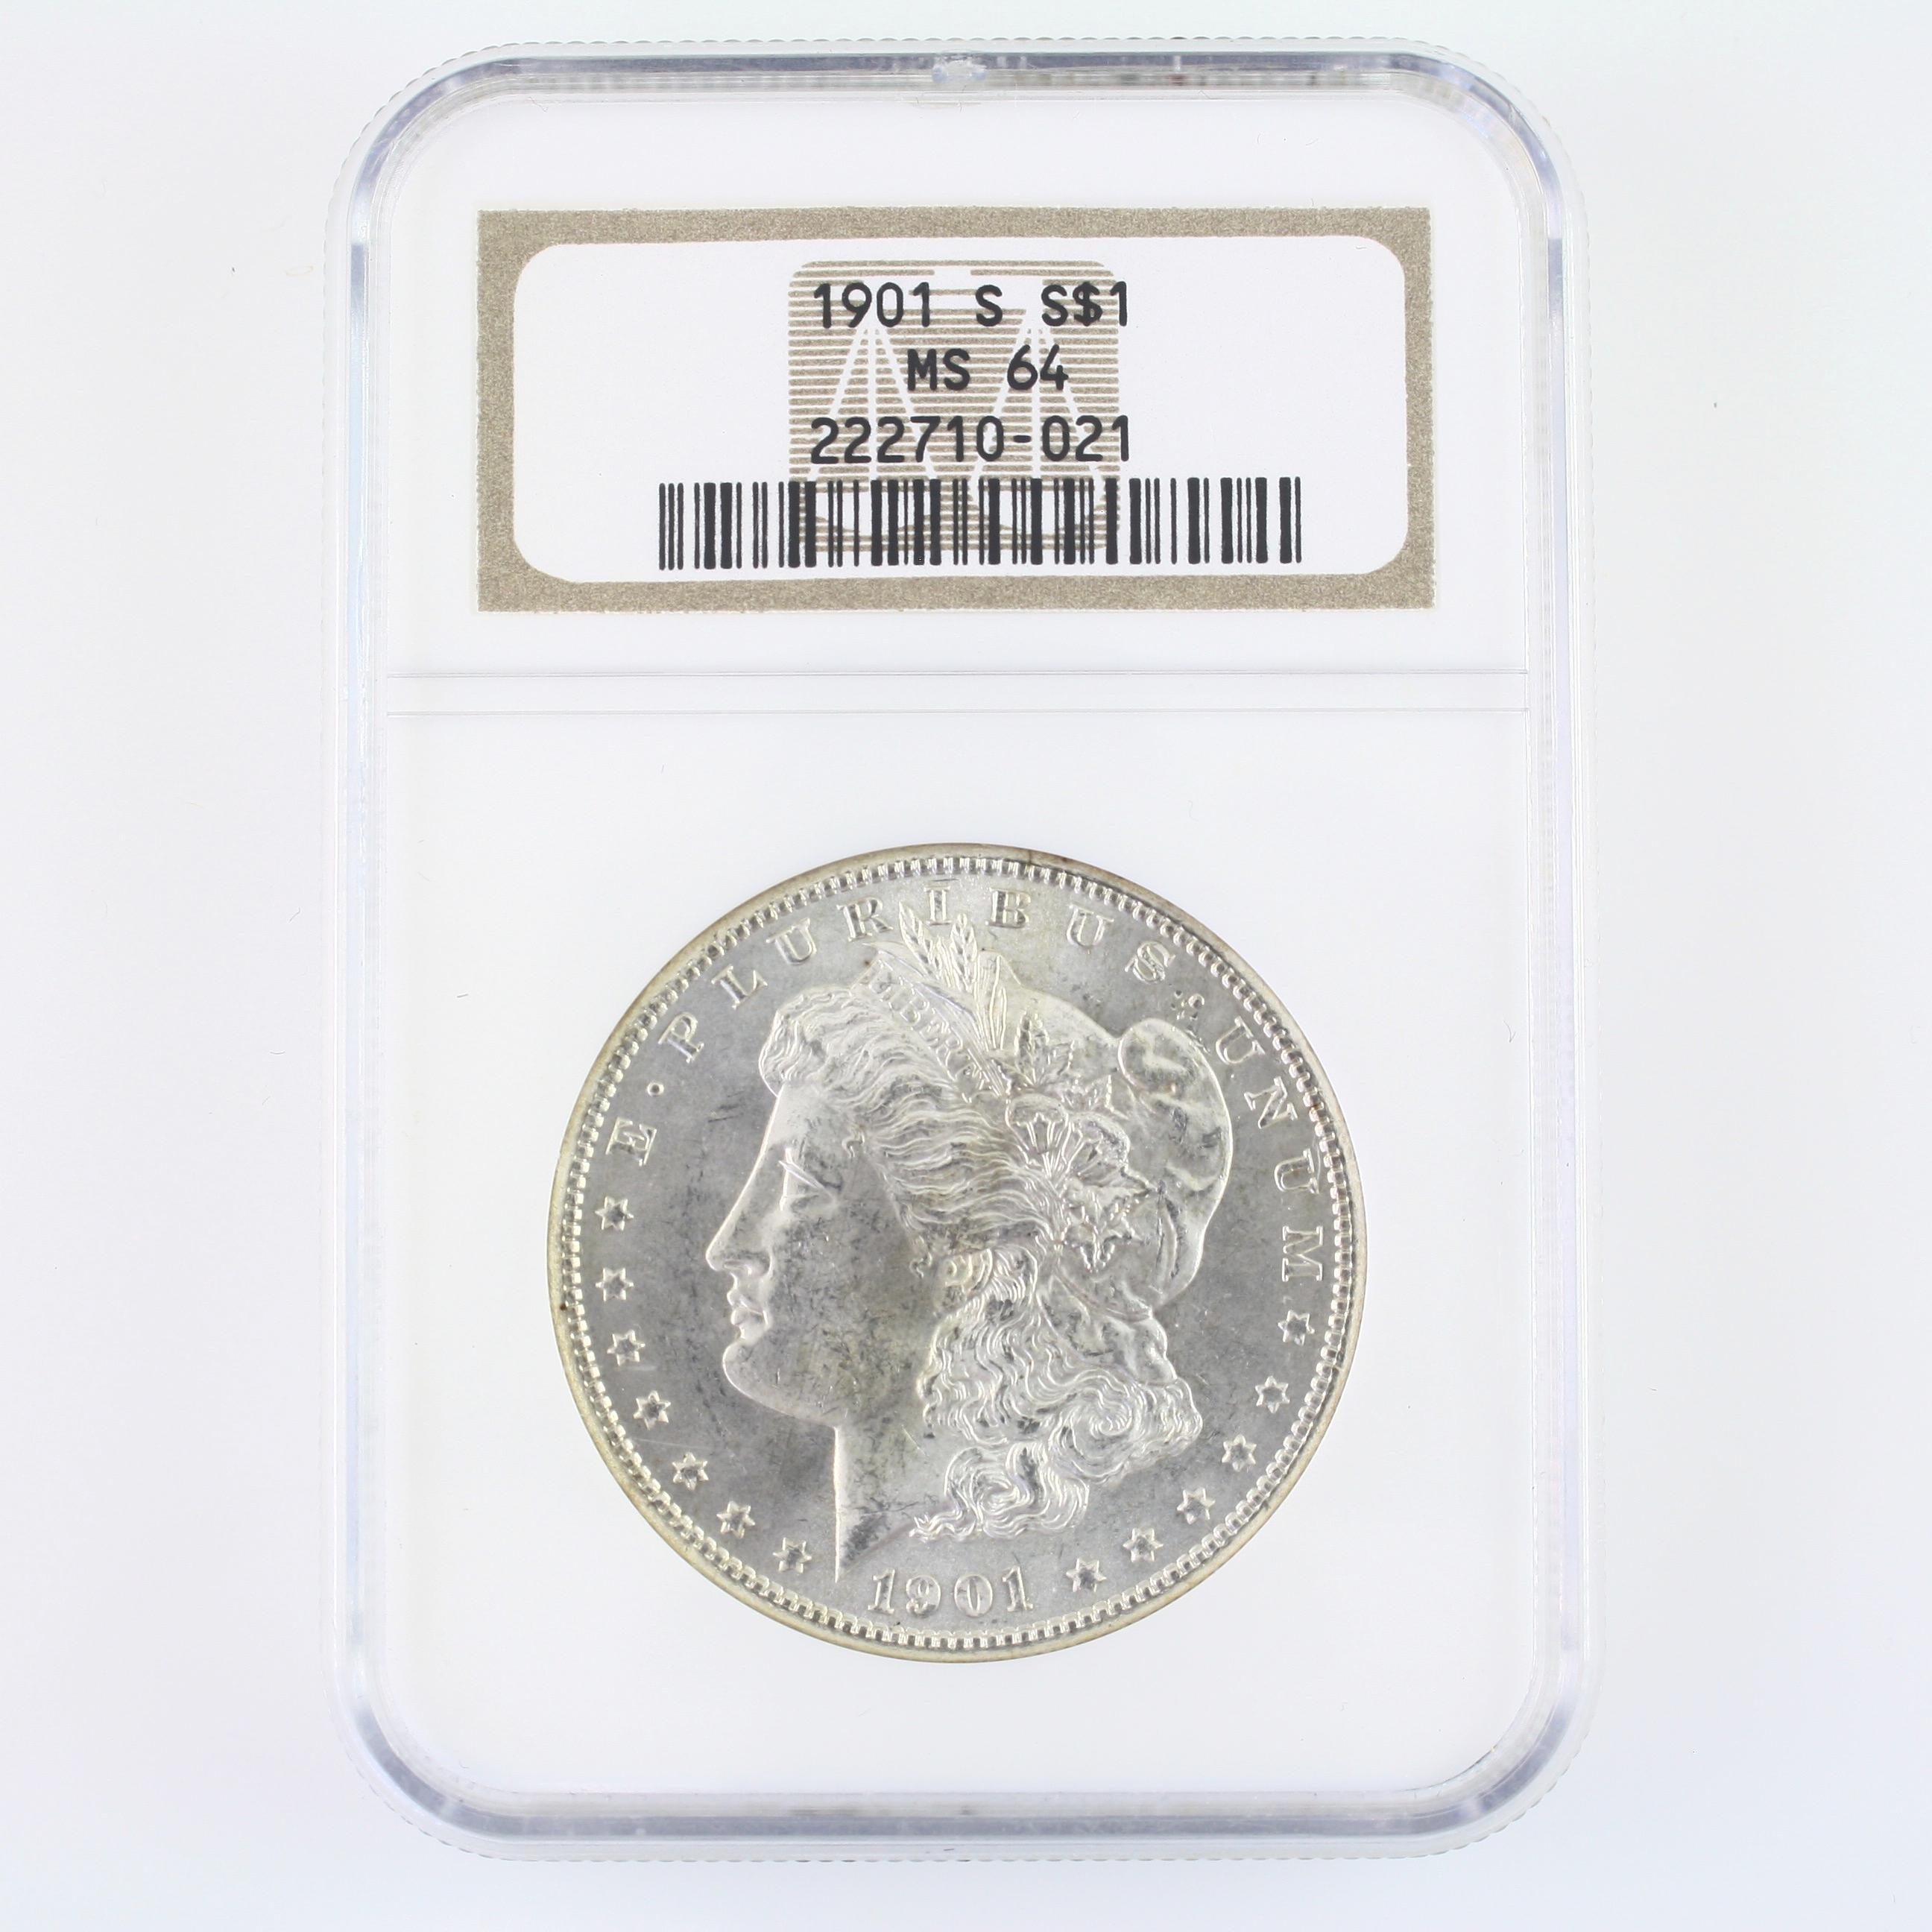 Certified 1901-S U.S. Morgan silver dollar